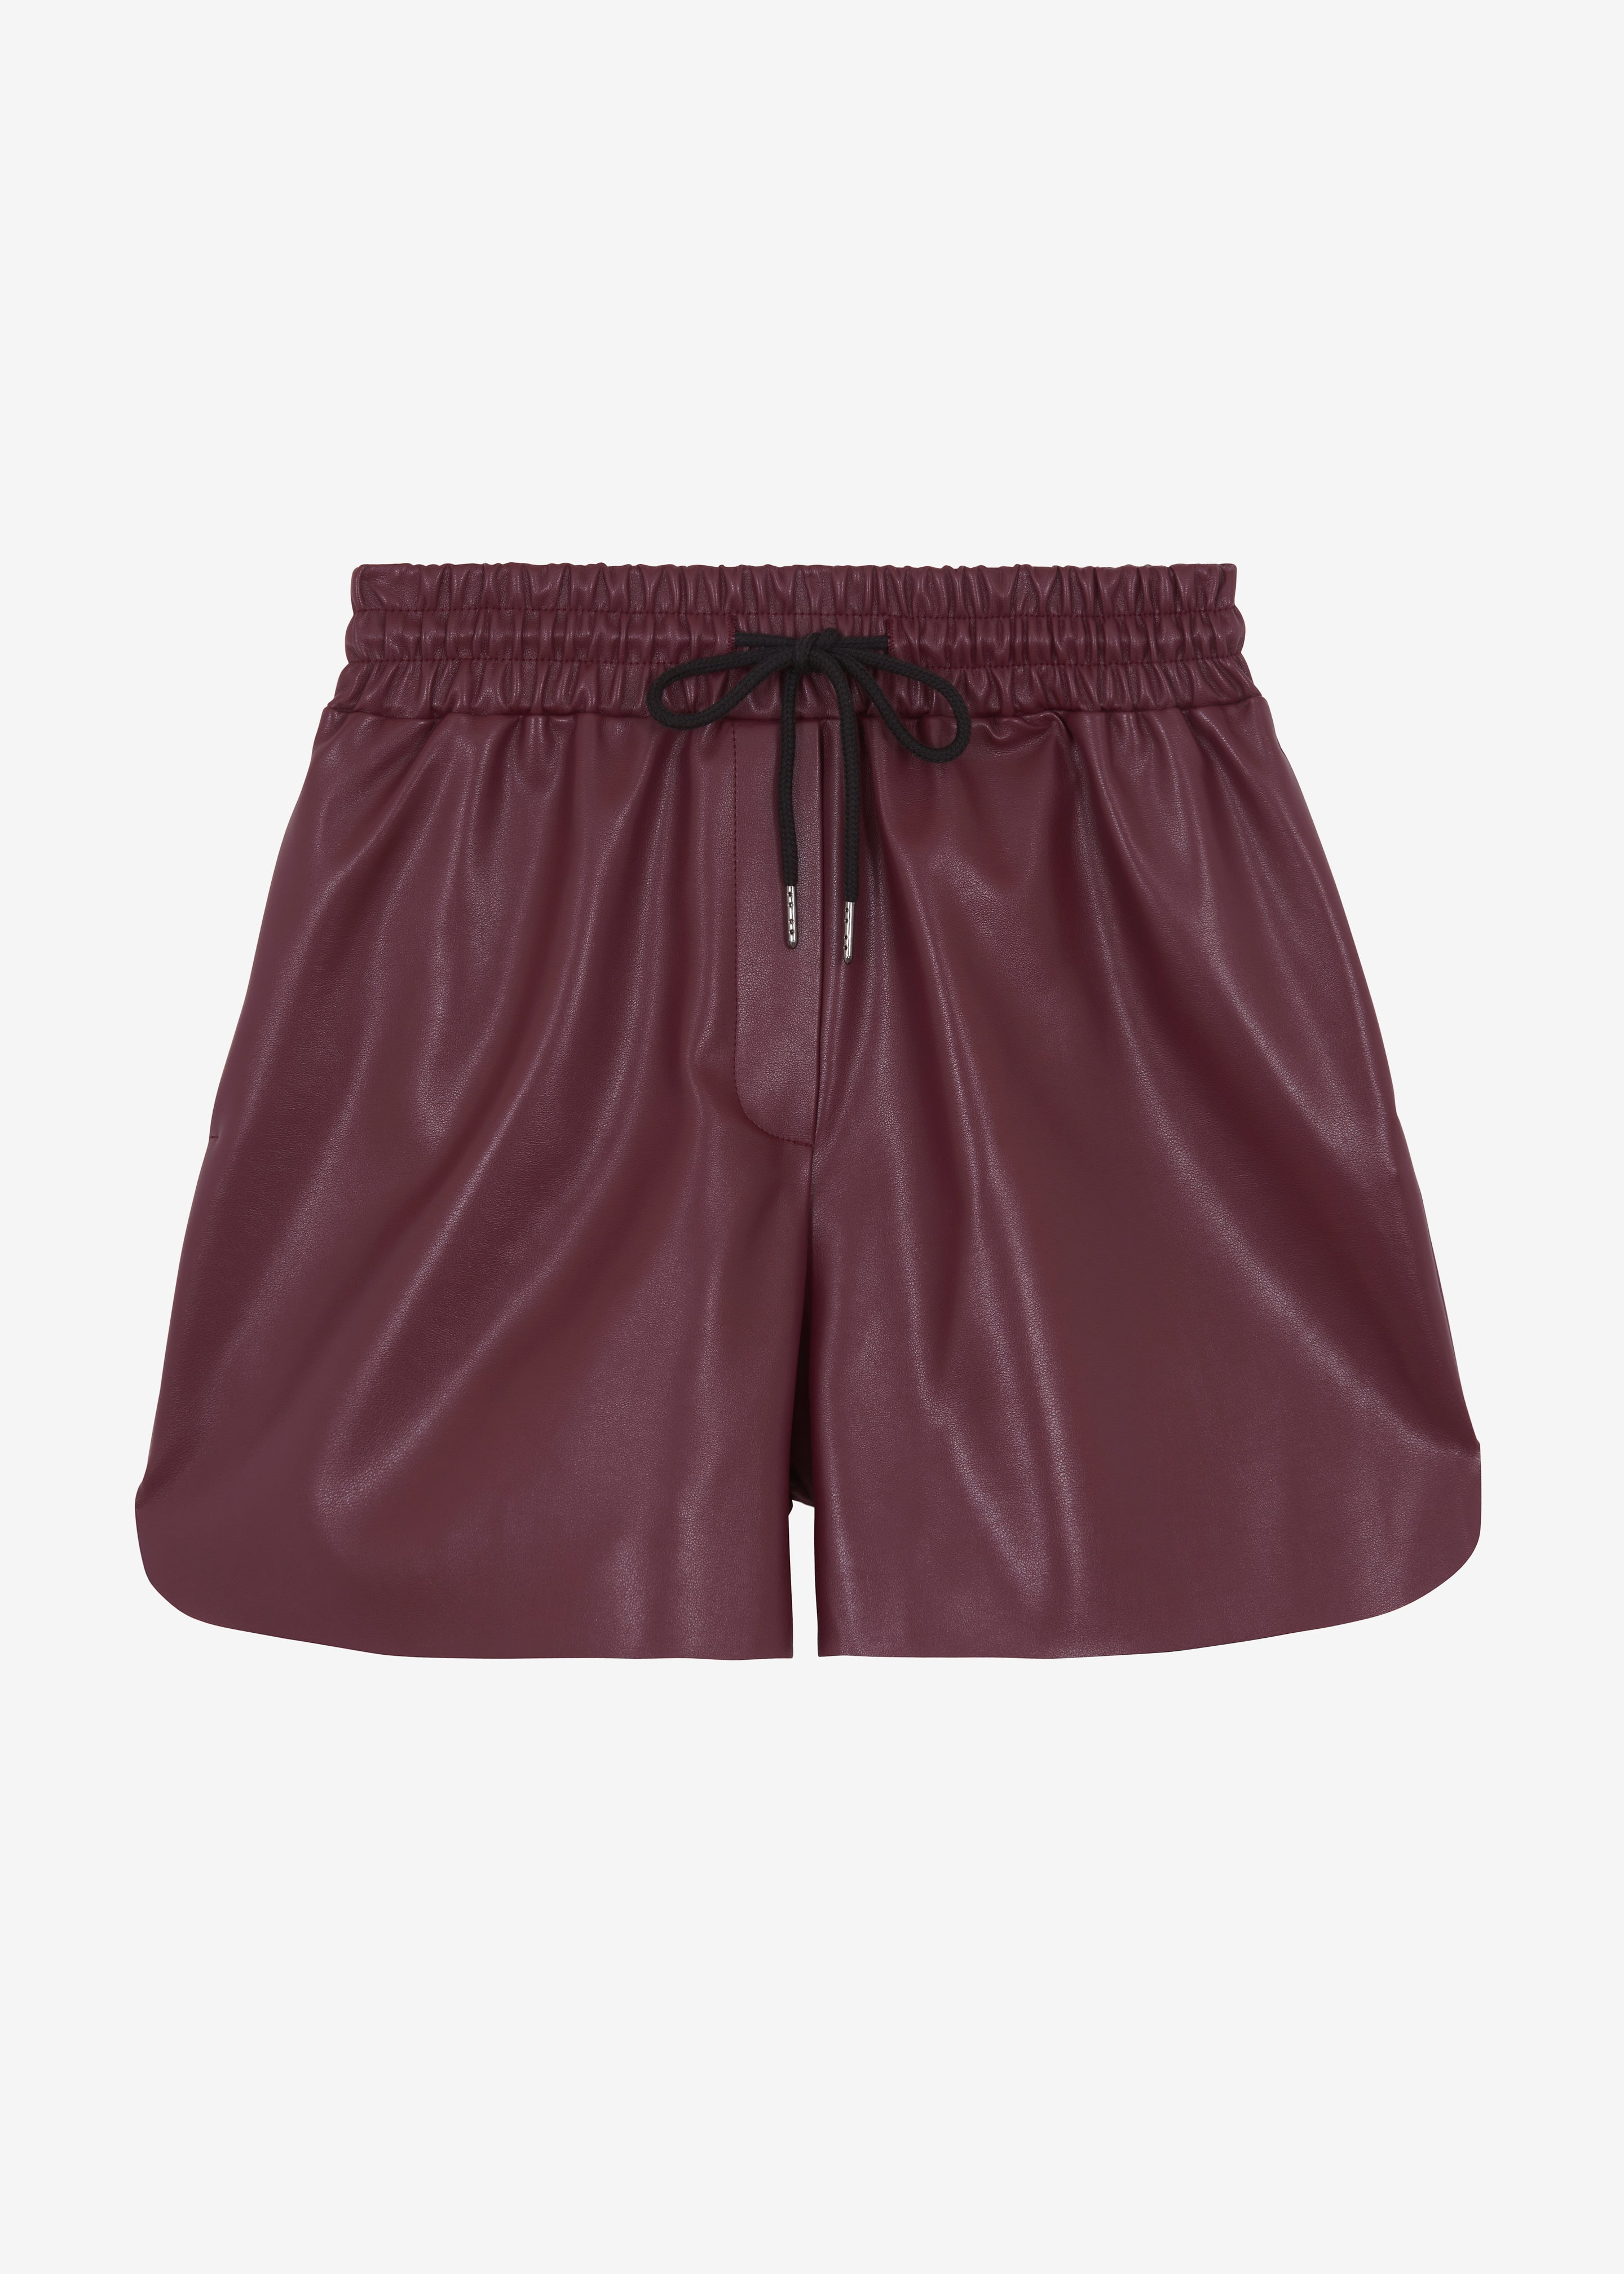 Kine Faux Leather Shorts - Burgundy - 8